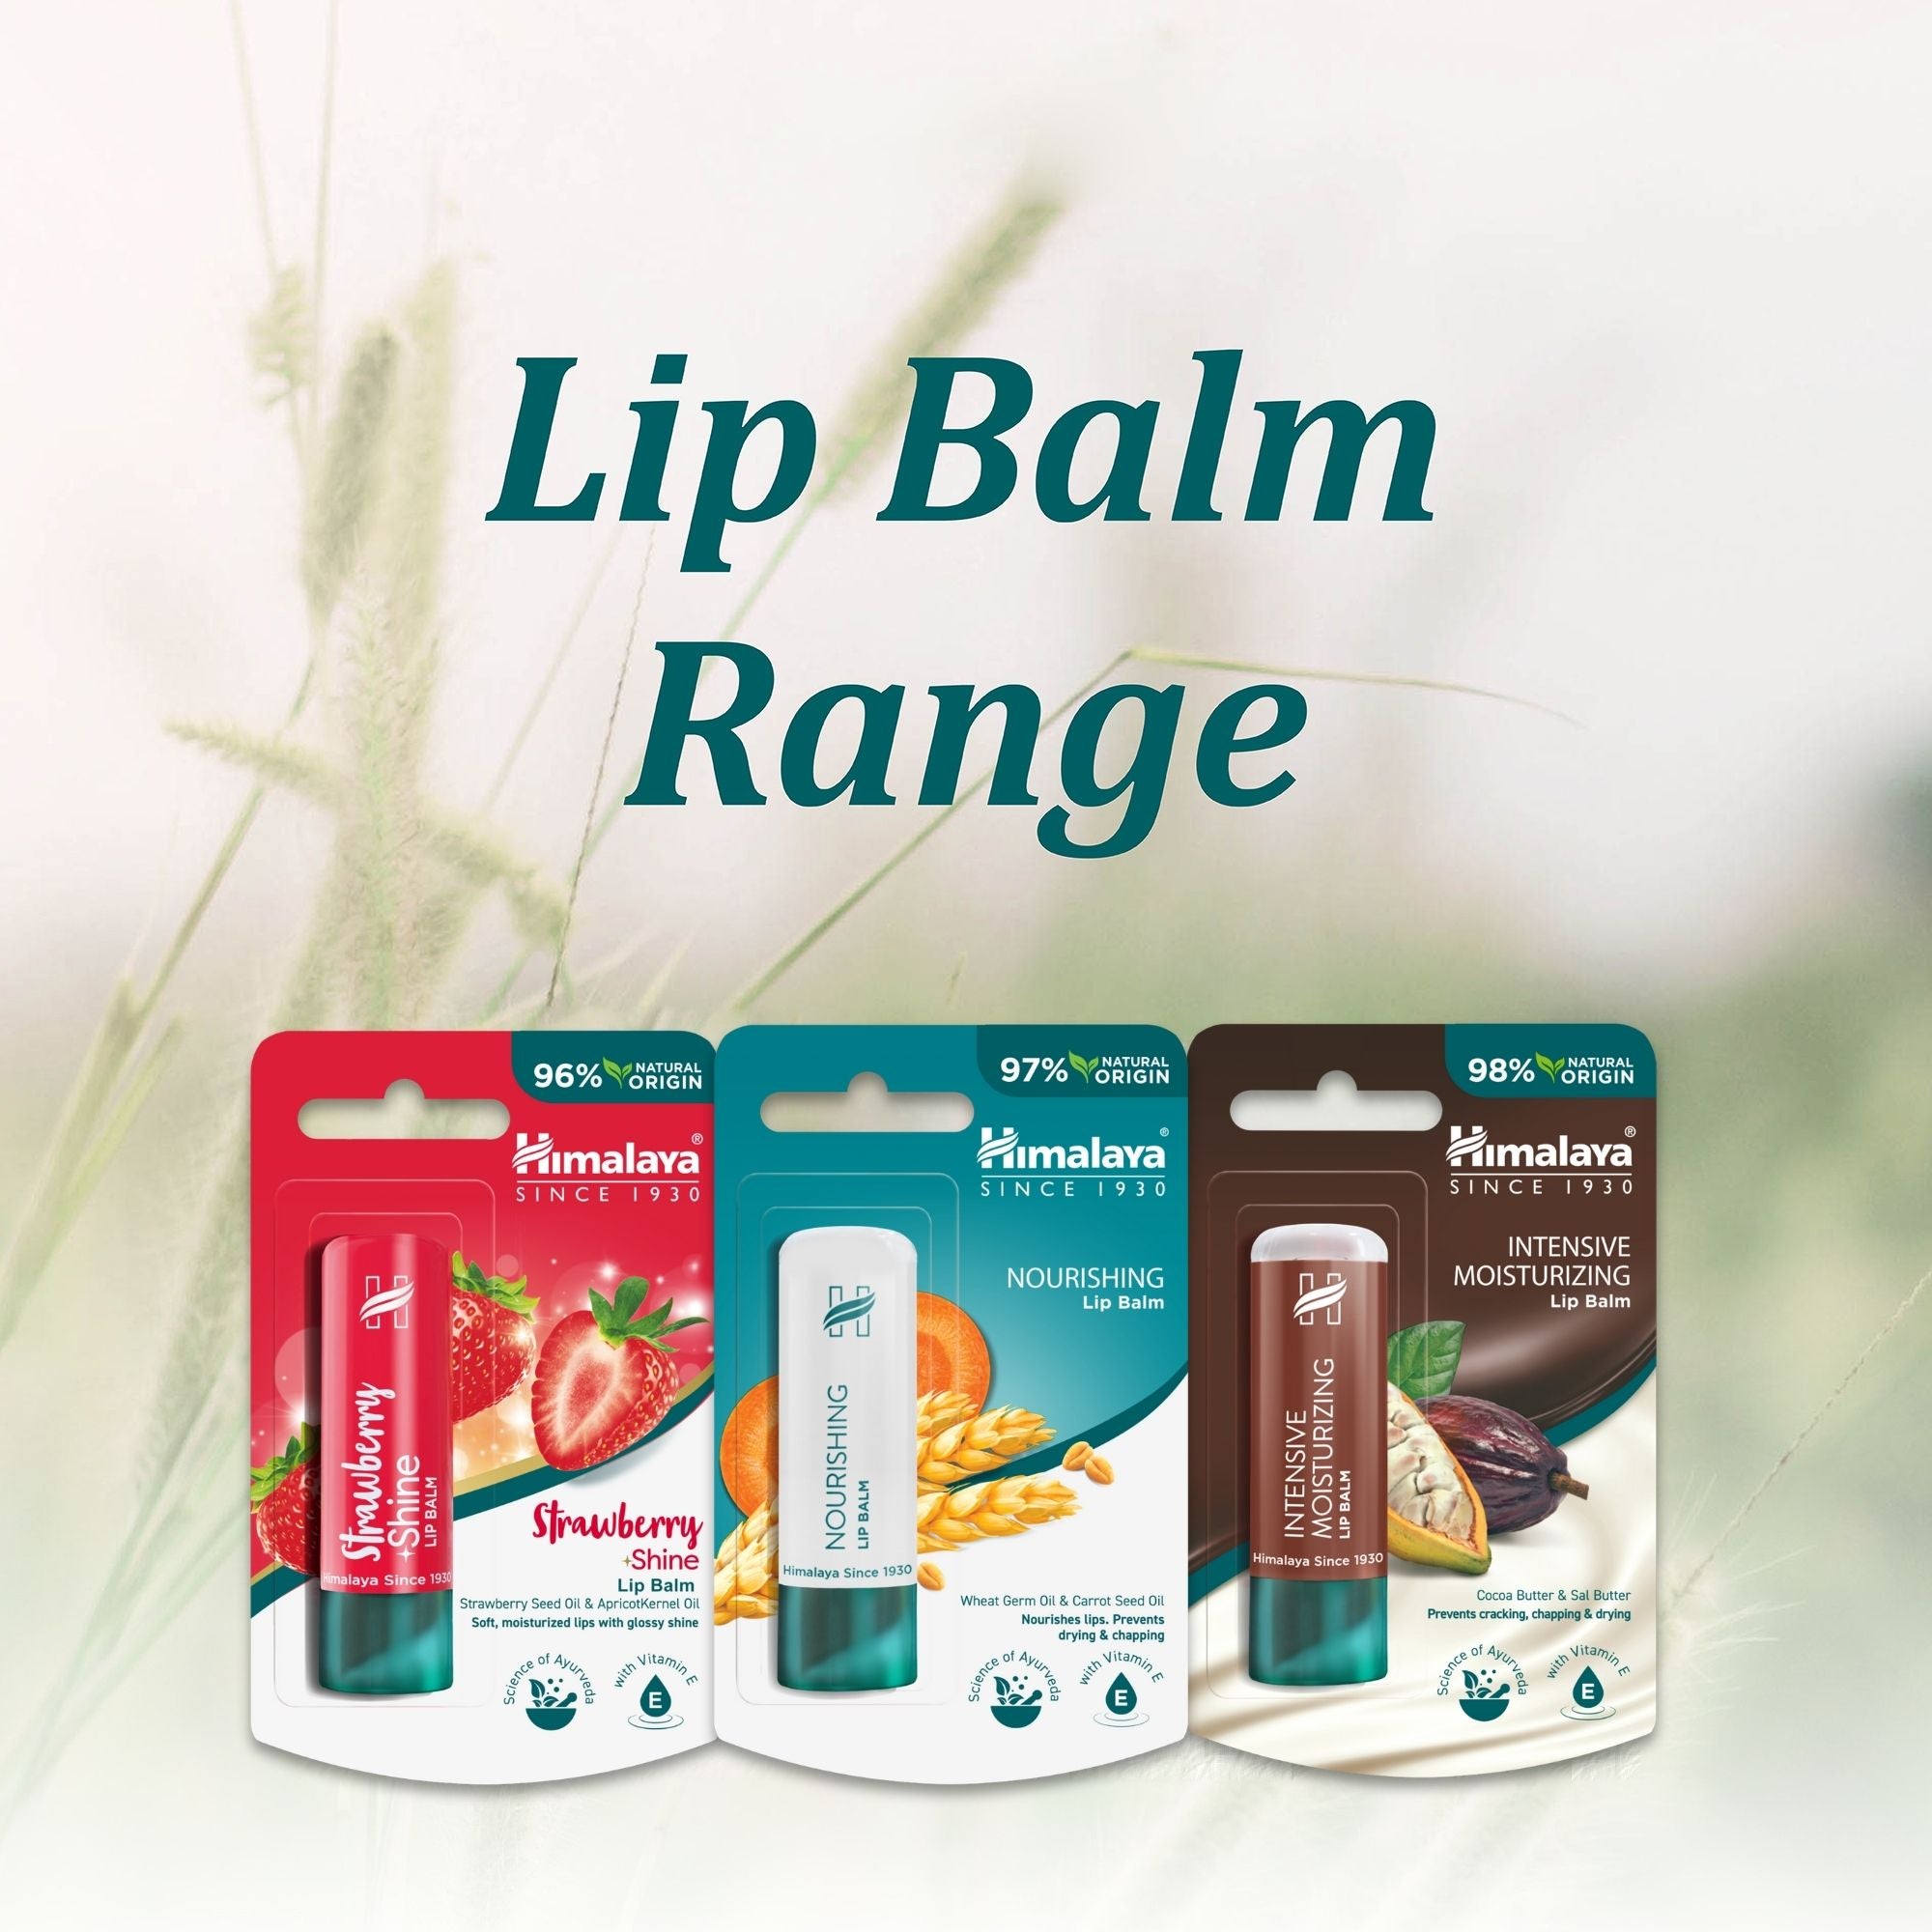 Himalaya Intensive Moisturizing Cocoa Butter Lip Balm - 4.5 g (Pack of 3)